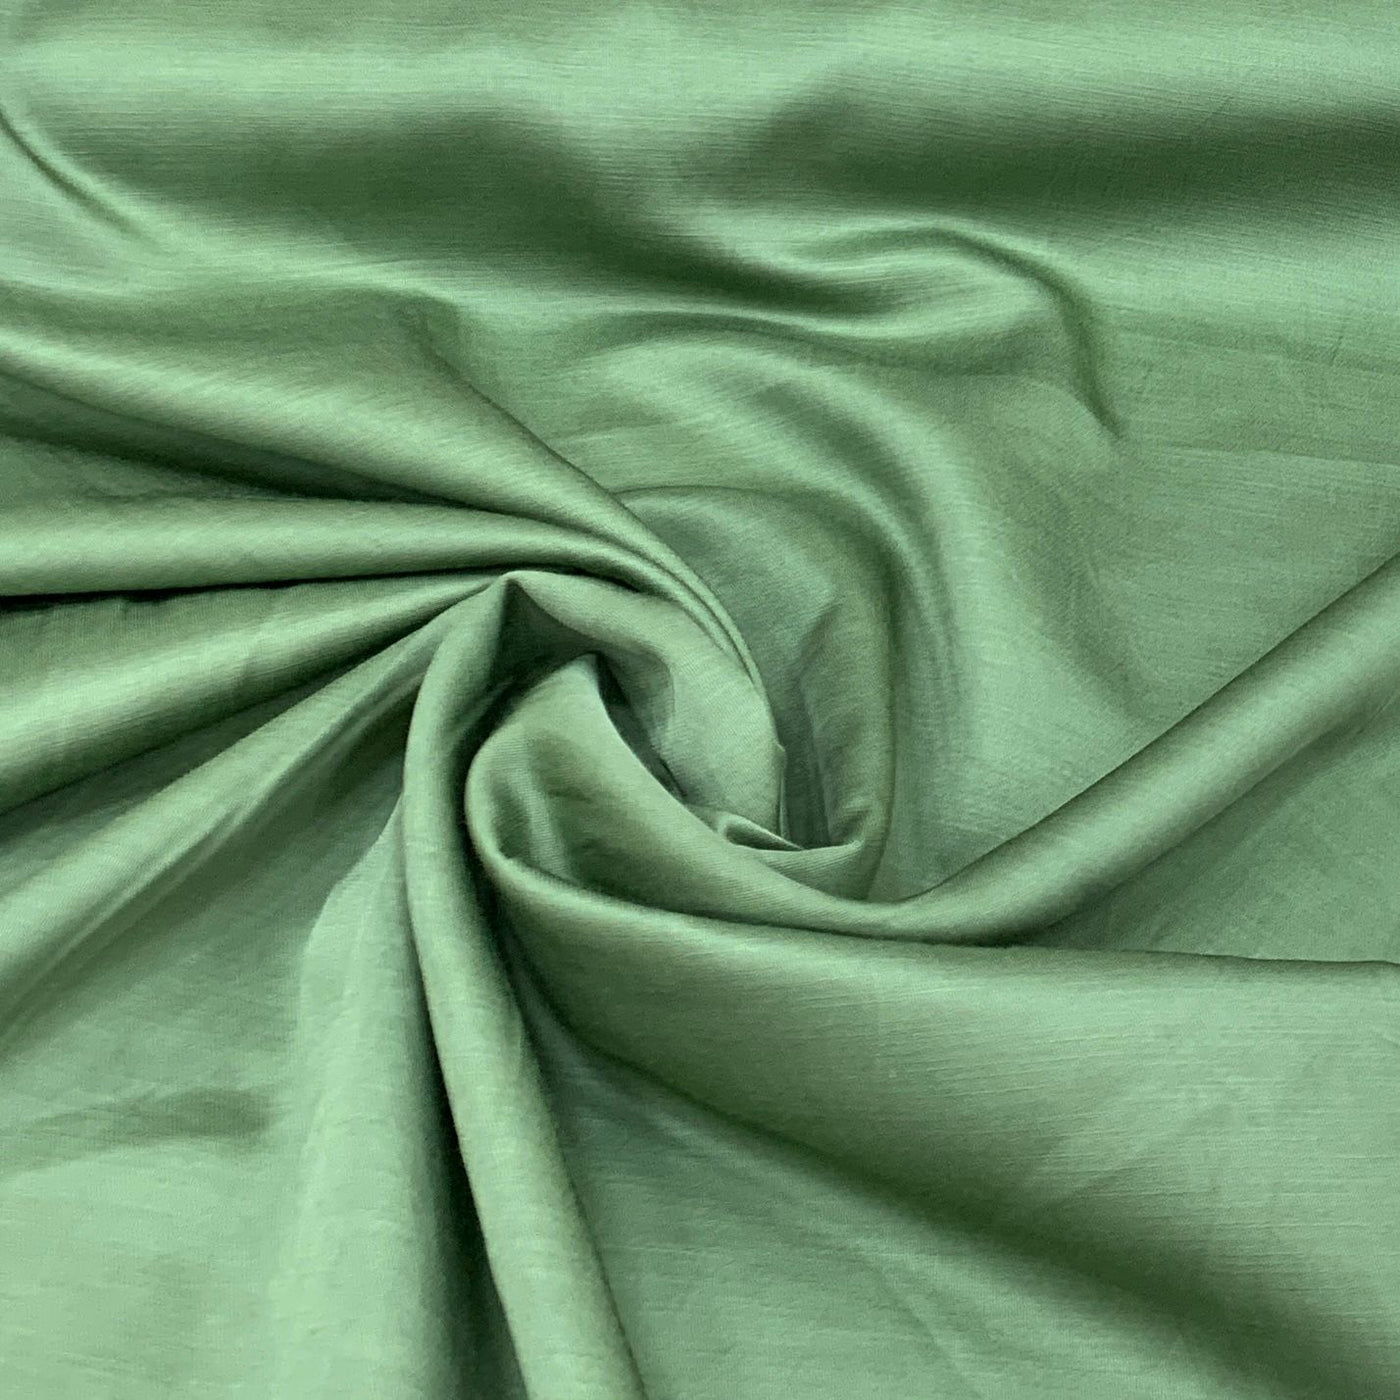 Teal Green Plain Satin Linen Fabric